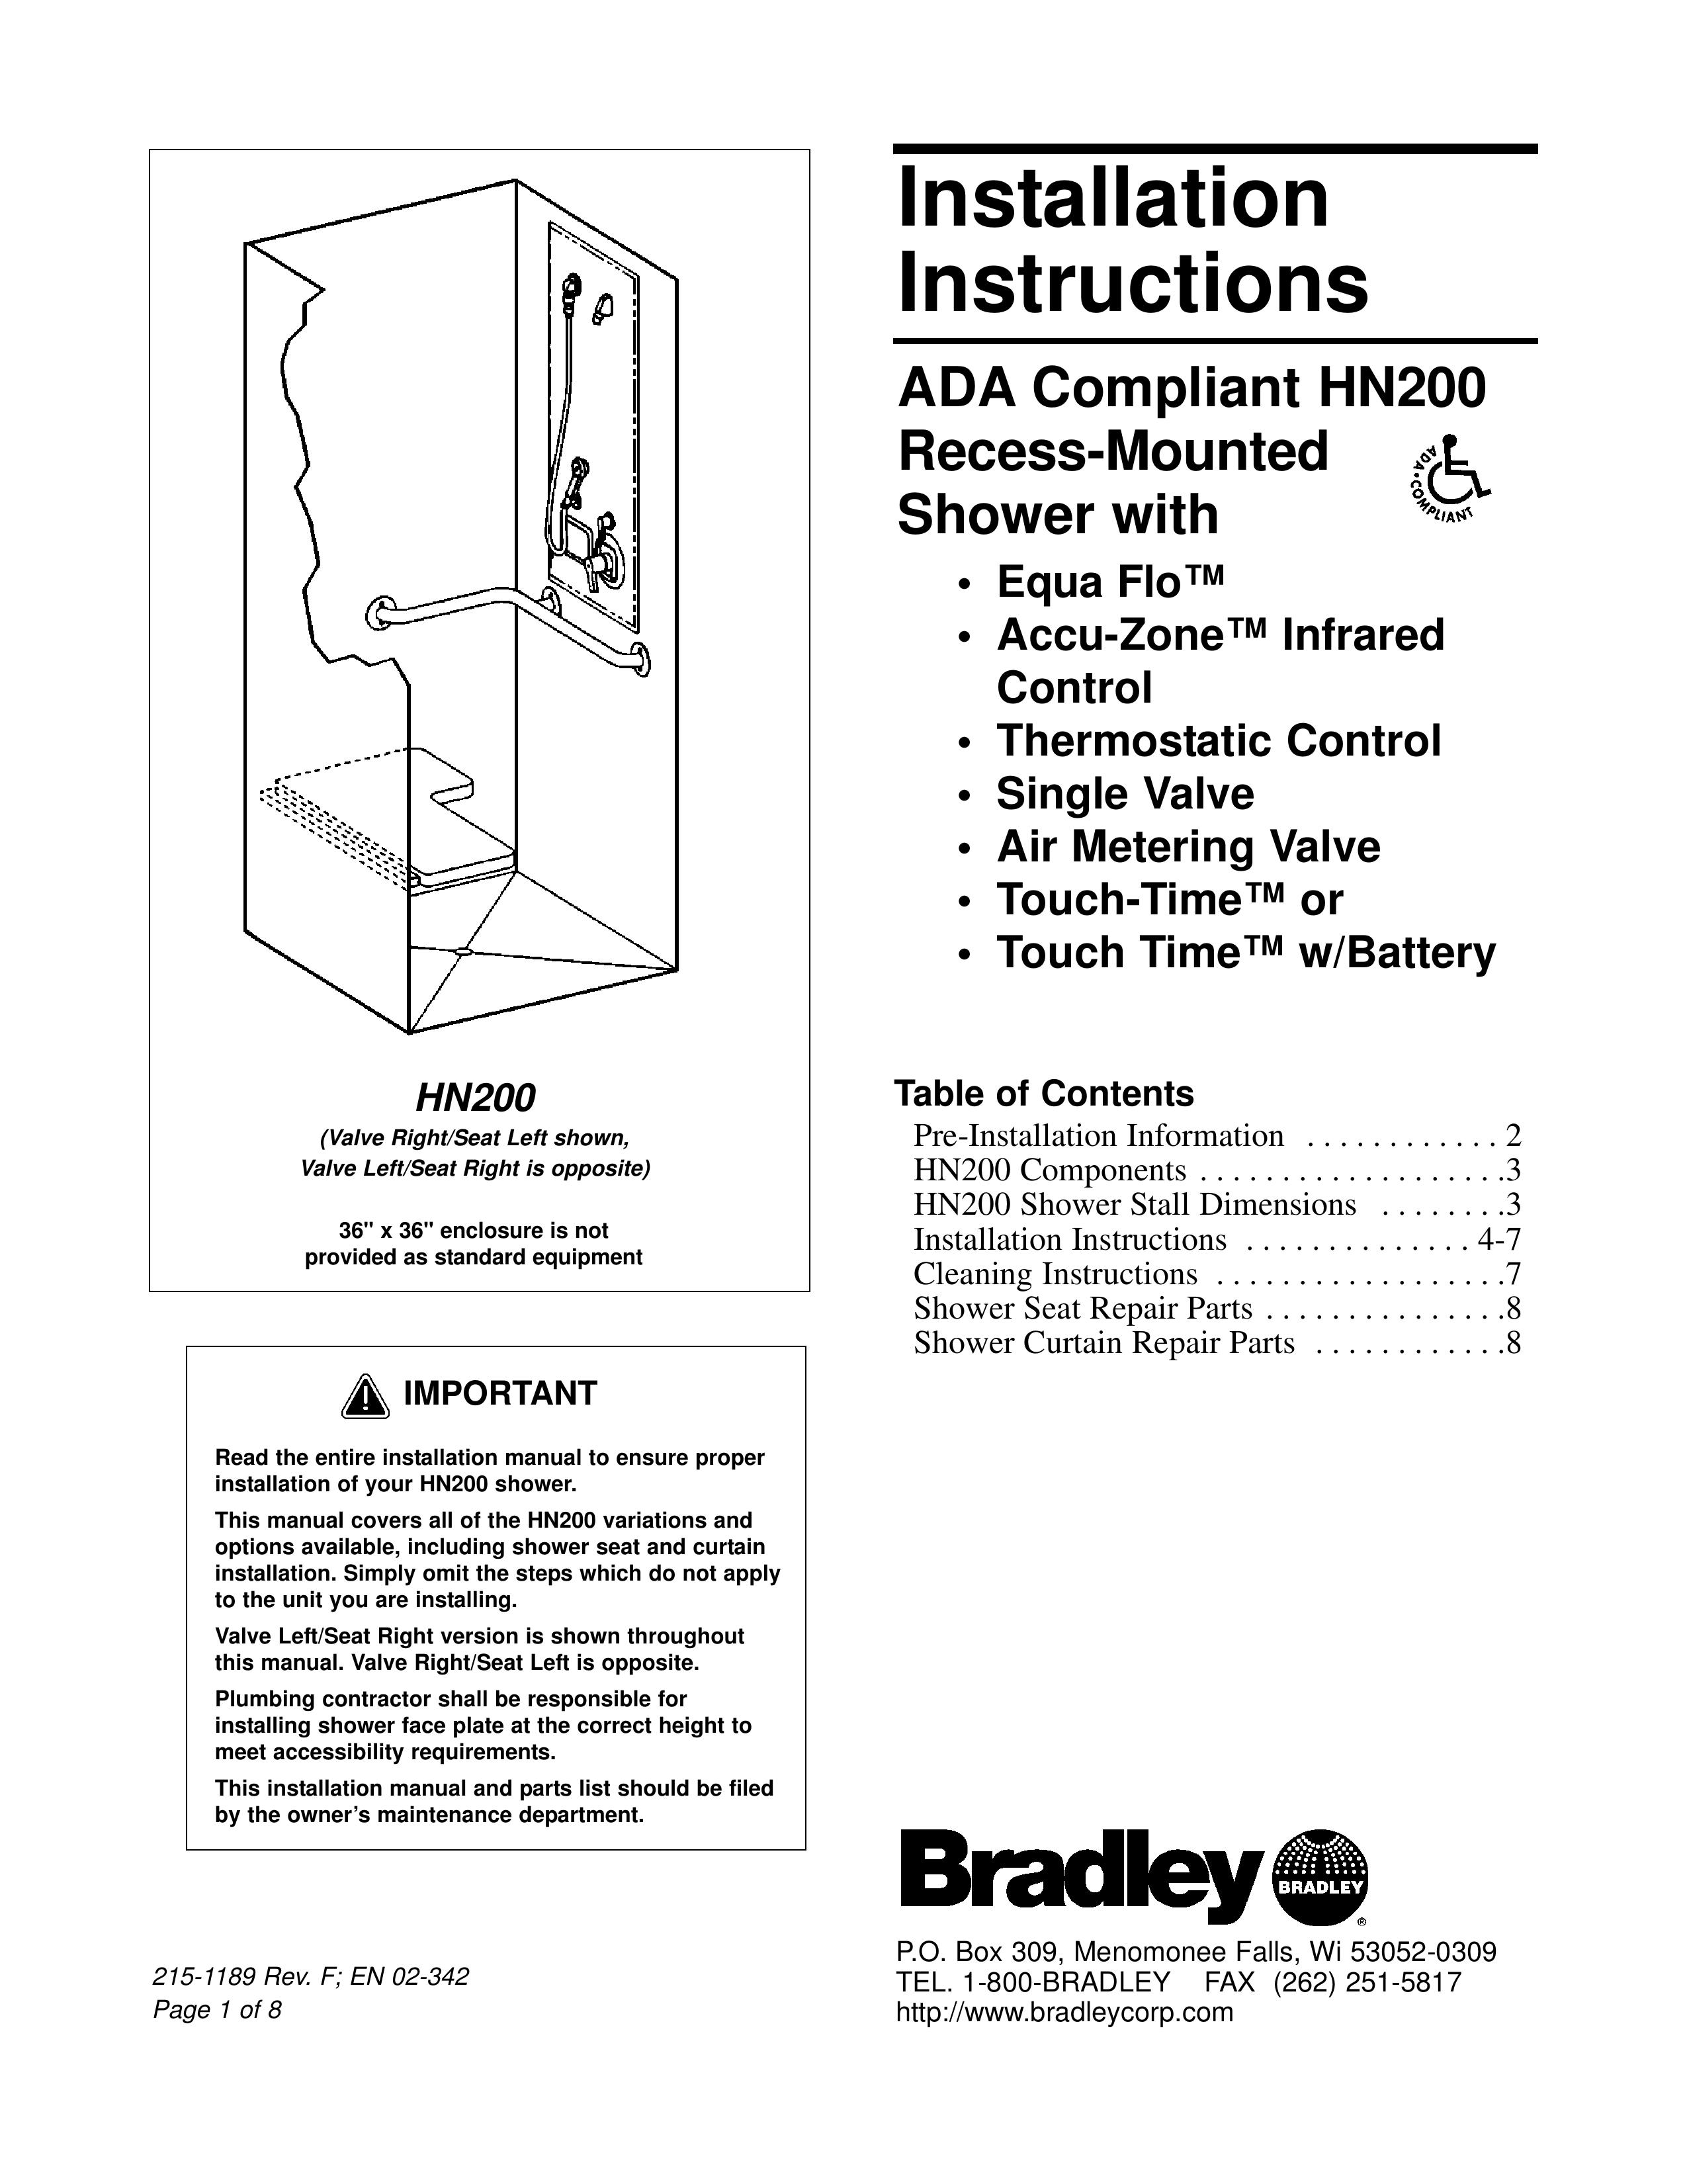 Bradley Smoker HN200 Outdoor Shower User Manual